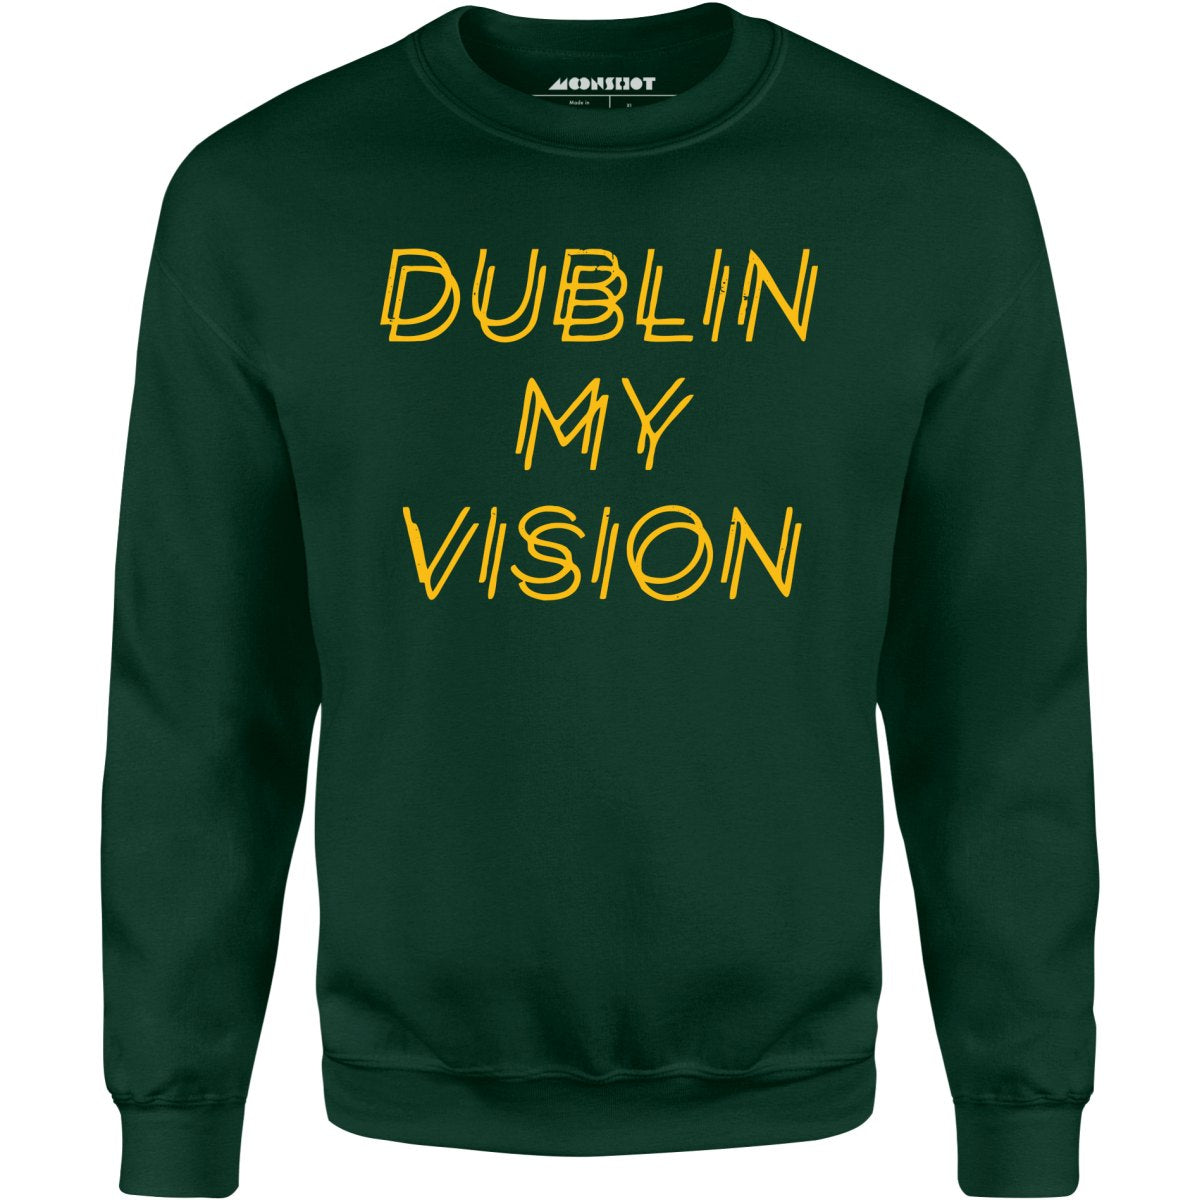 Dublin My Vision - Unisex Sweatshirt